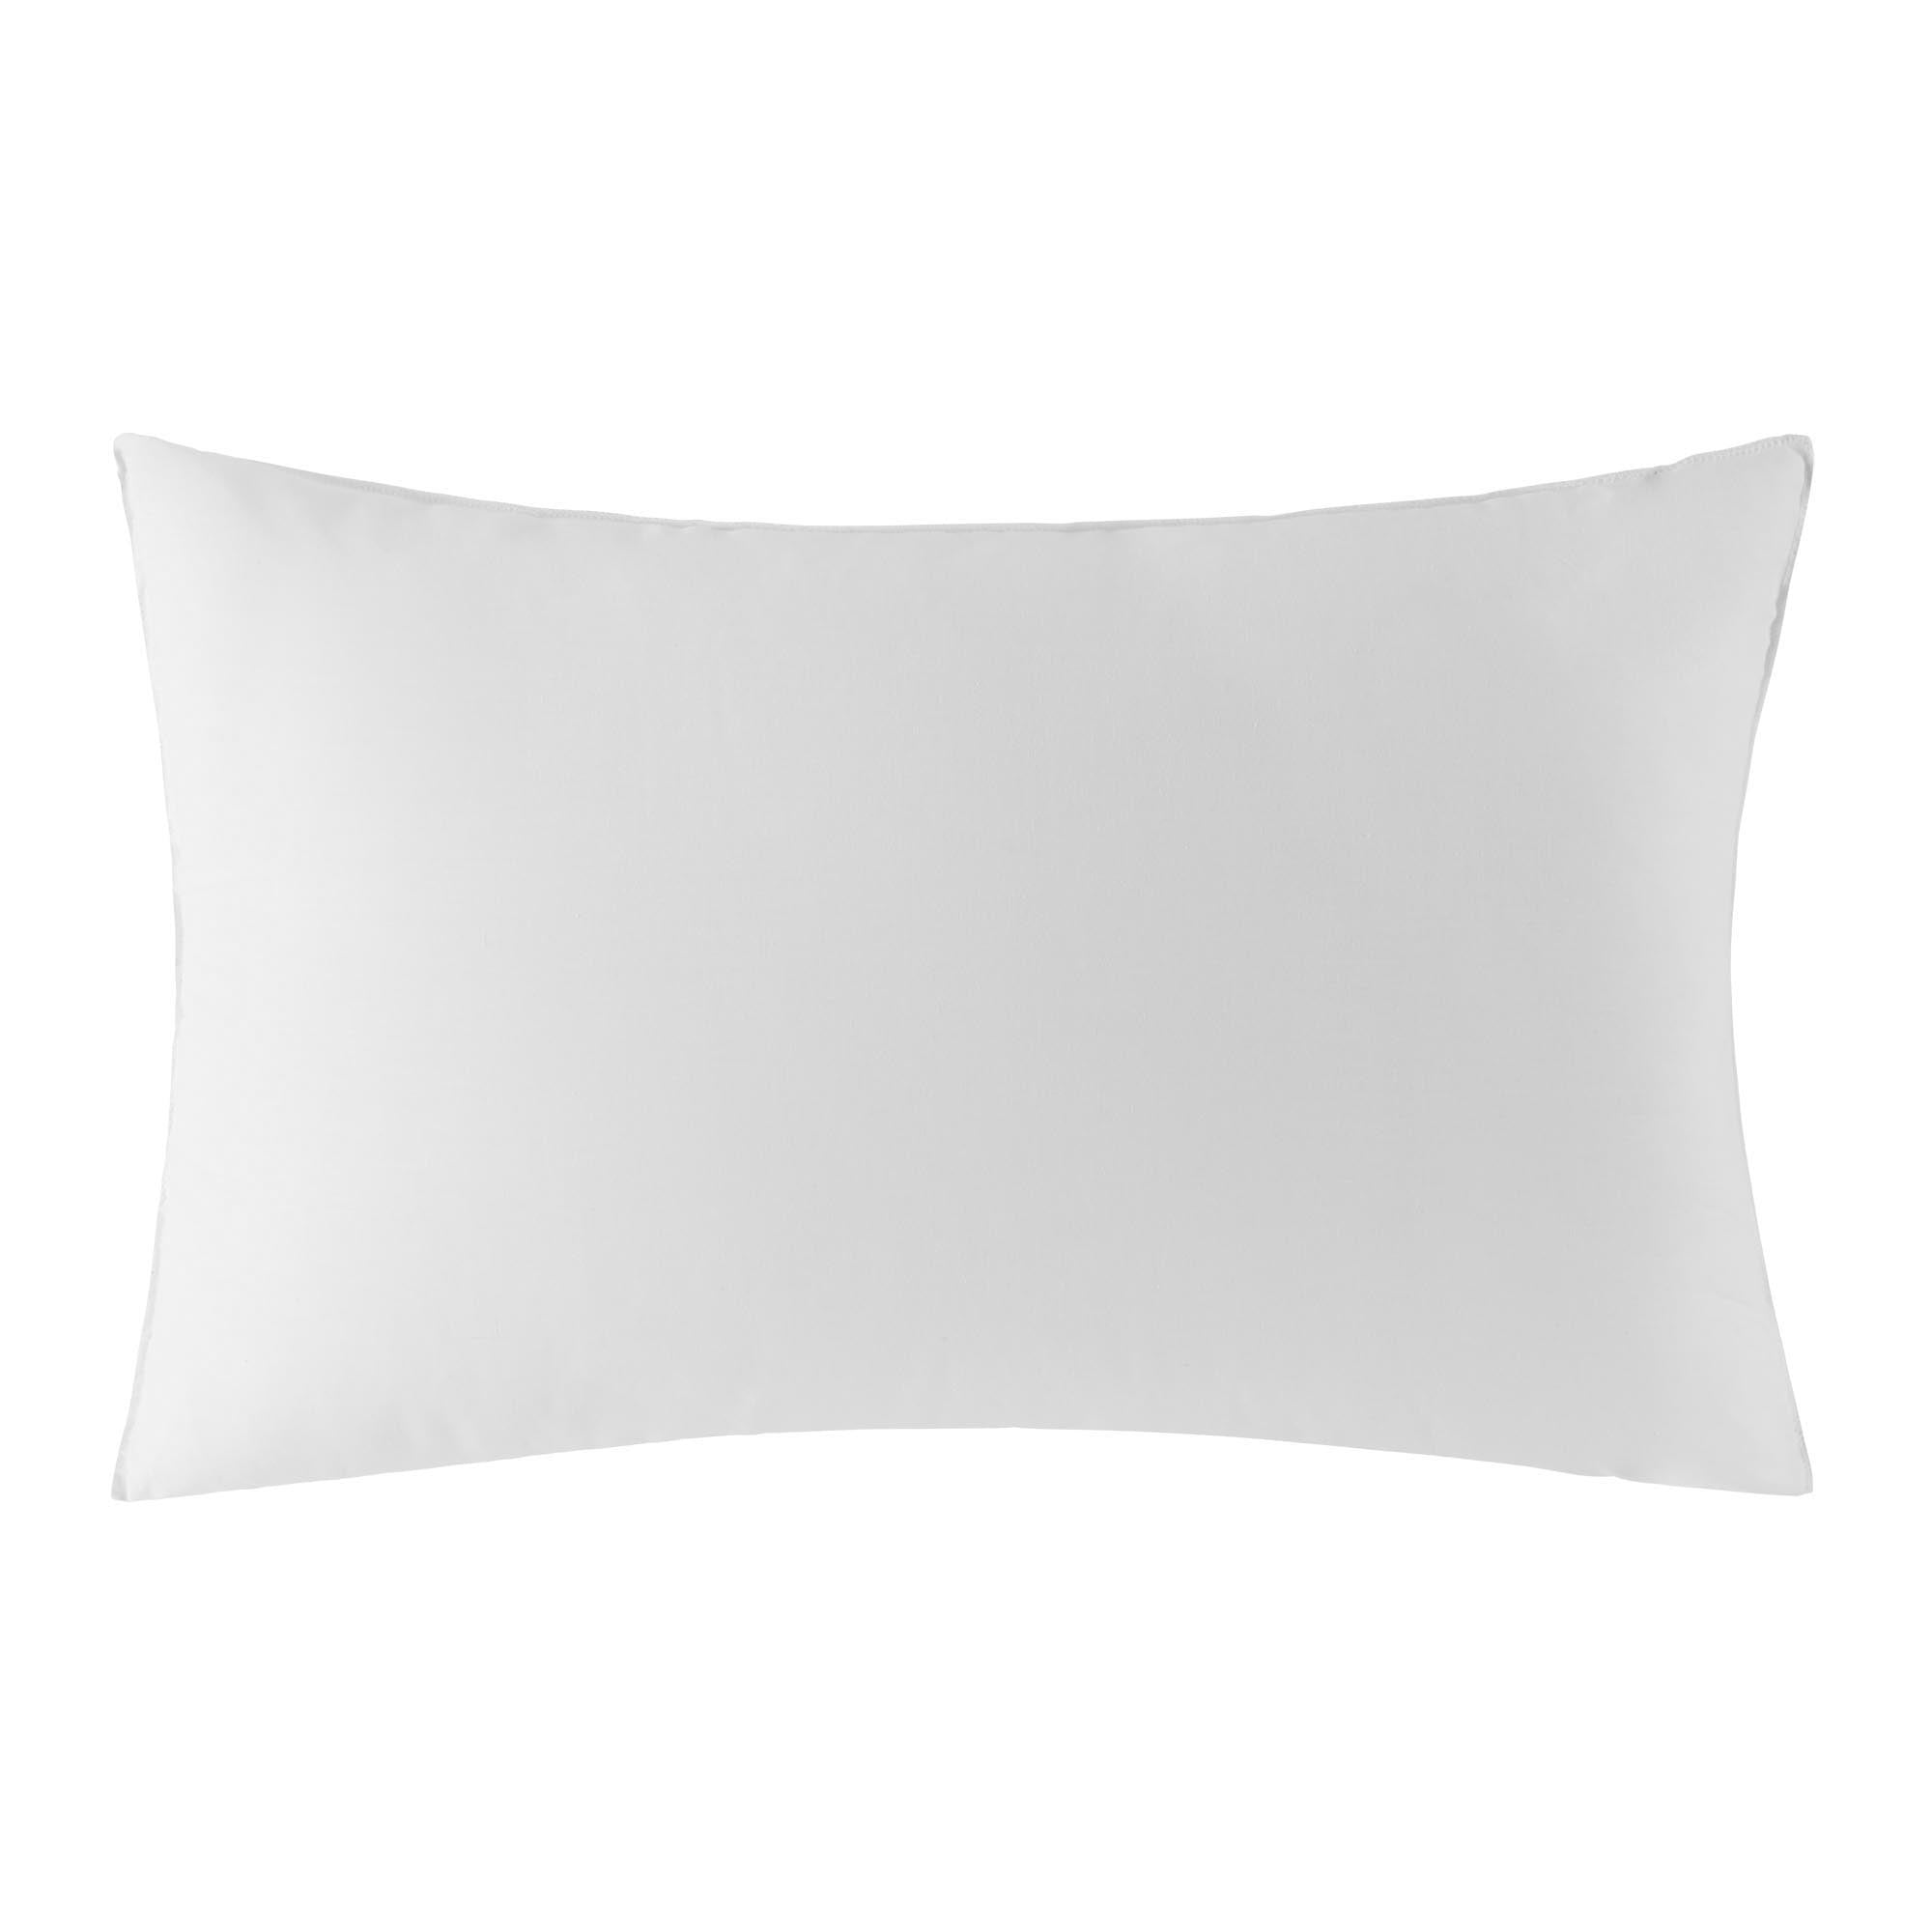 Fibre white cushion pad insert